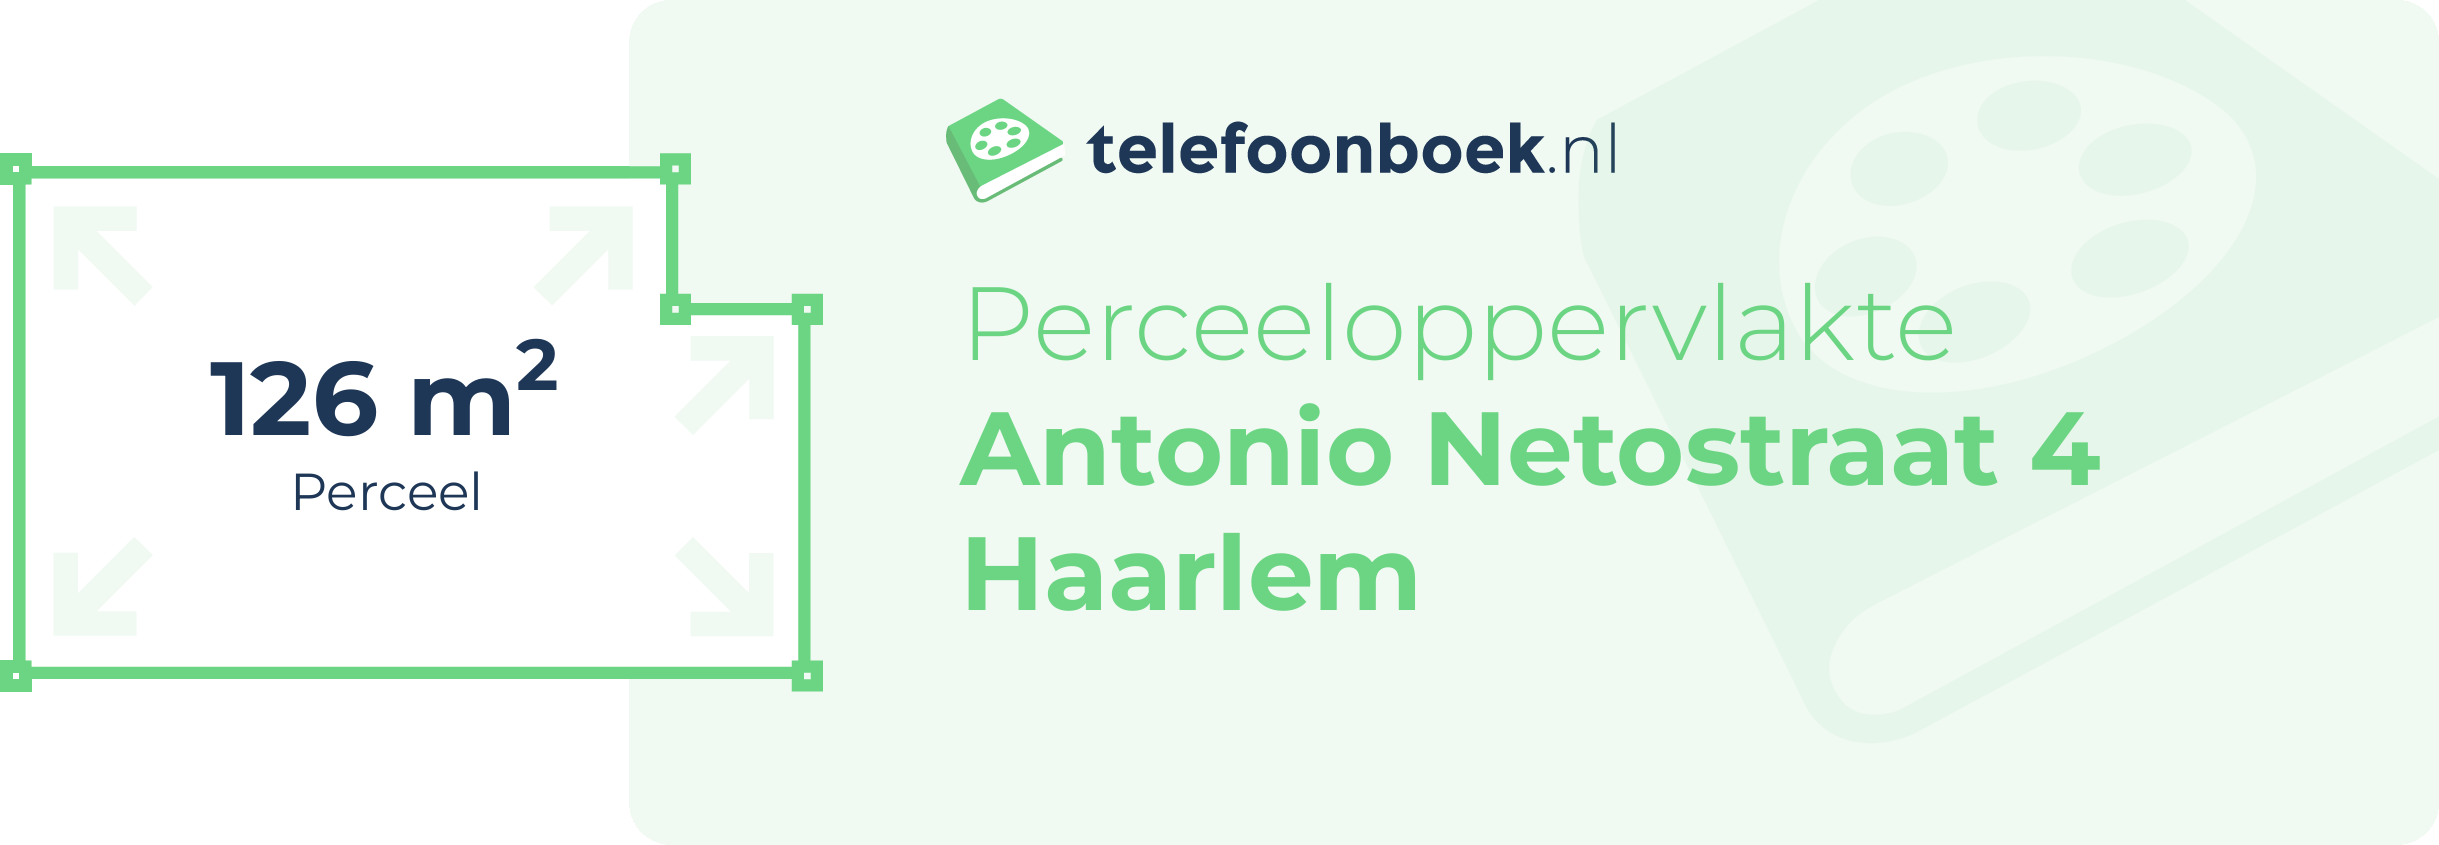 Perceeloppervlakte Antonio Netostraat 4 Haarlem